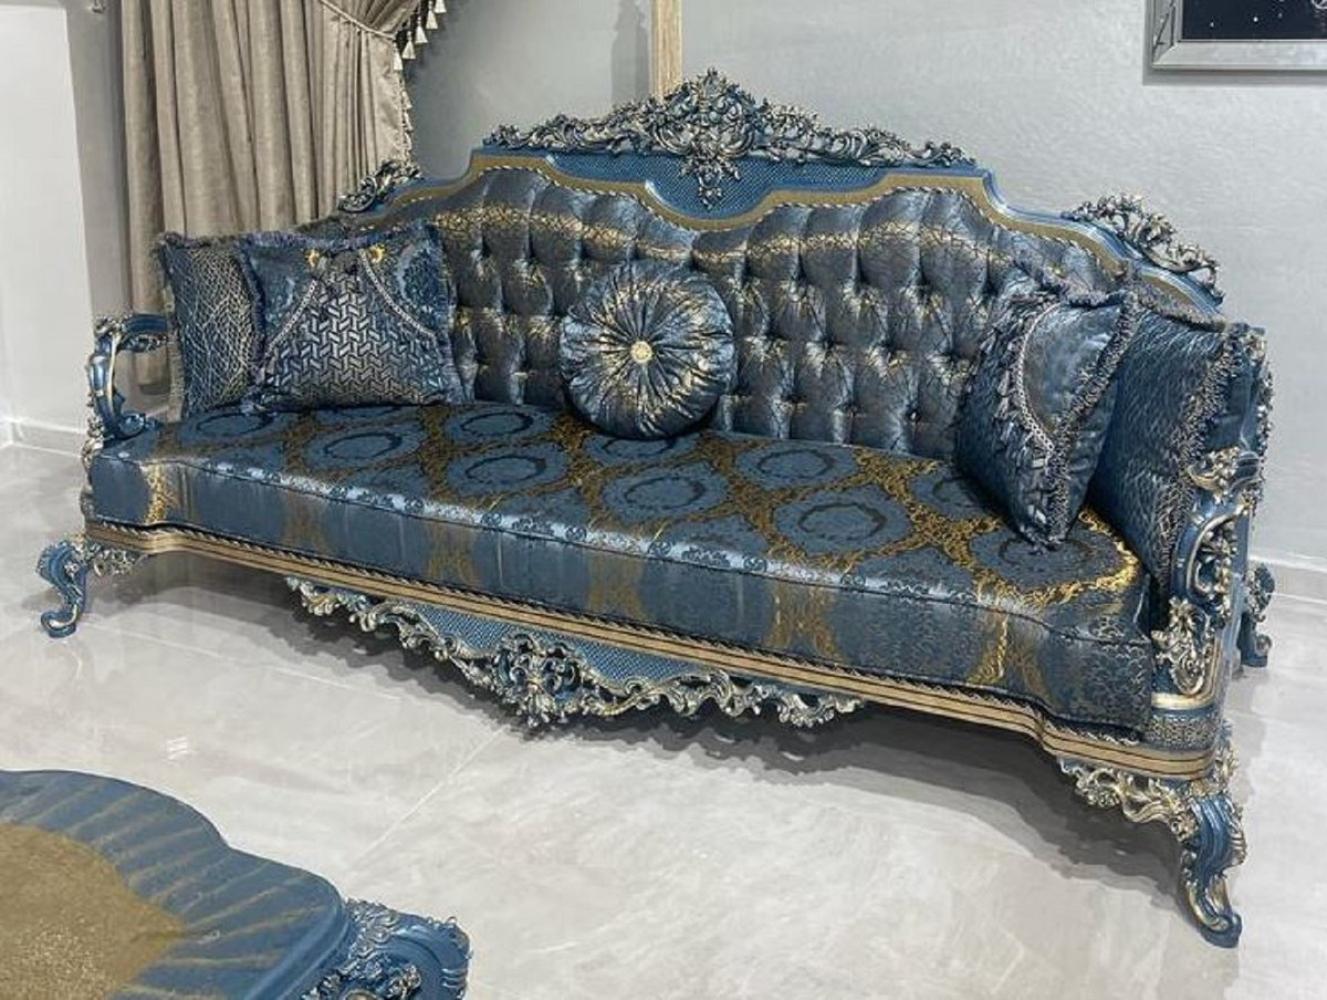 Casa Padrino Luxus Barock Sofa Blau / Gold - Prunkvolles Wohnzimmer Sofa mit elegantem Muster - Barockstil Wohnzimmer Möbel - Luxus Möbel im Barockstil - Edel & Prunkvoll Bild 1